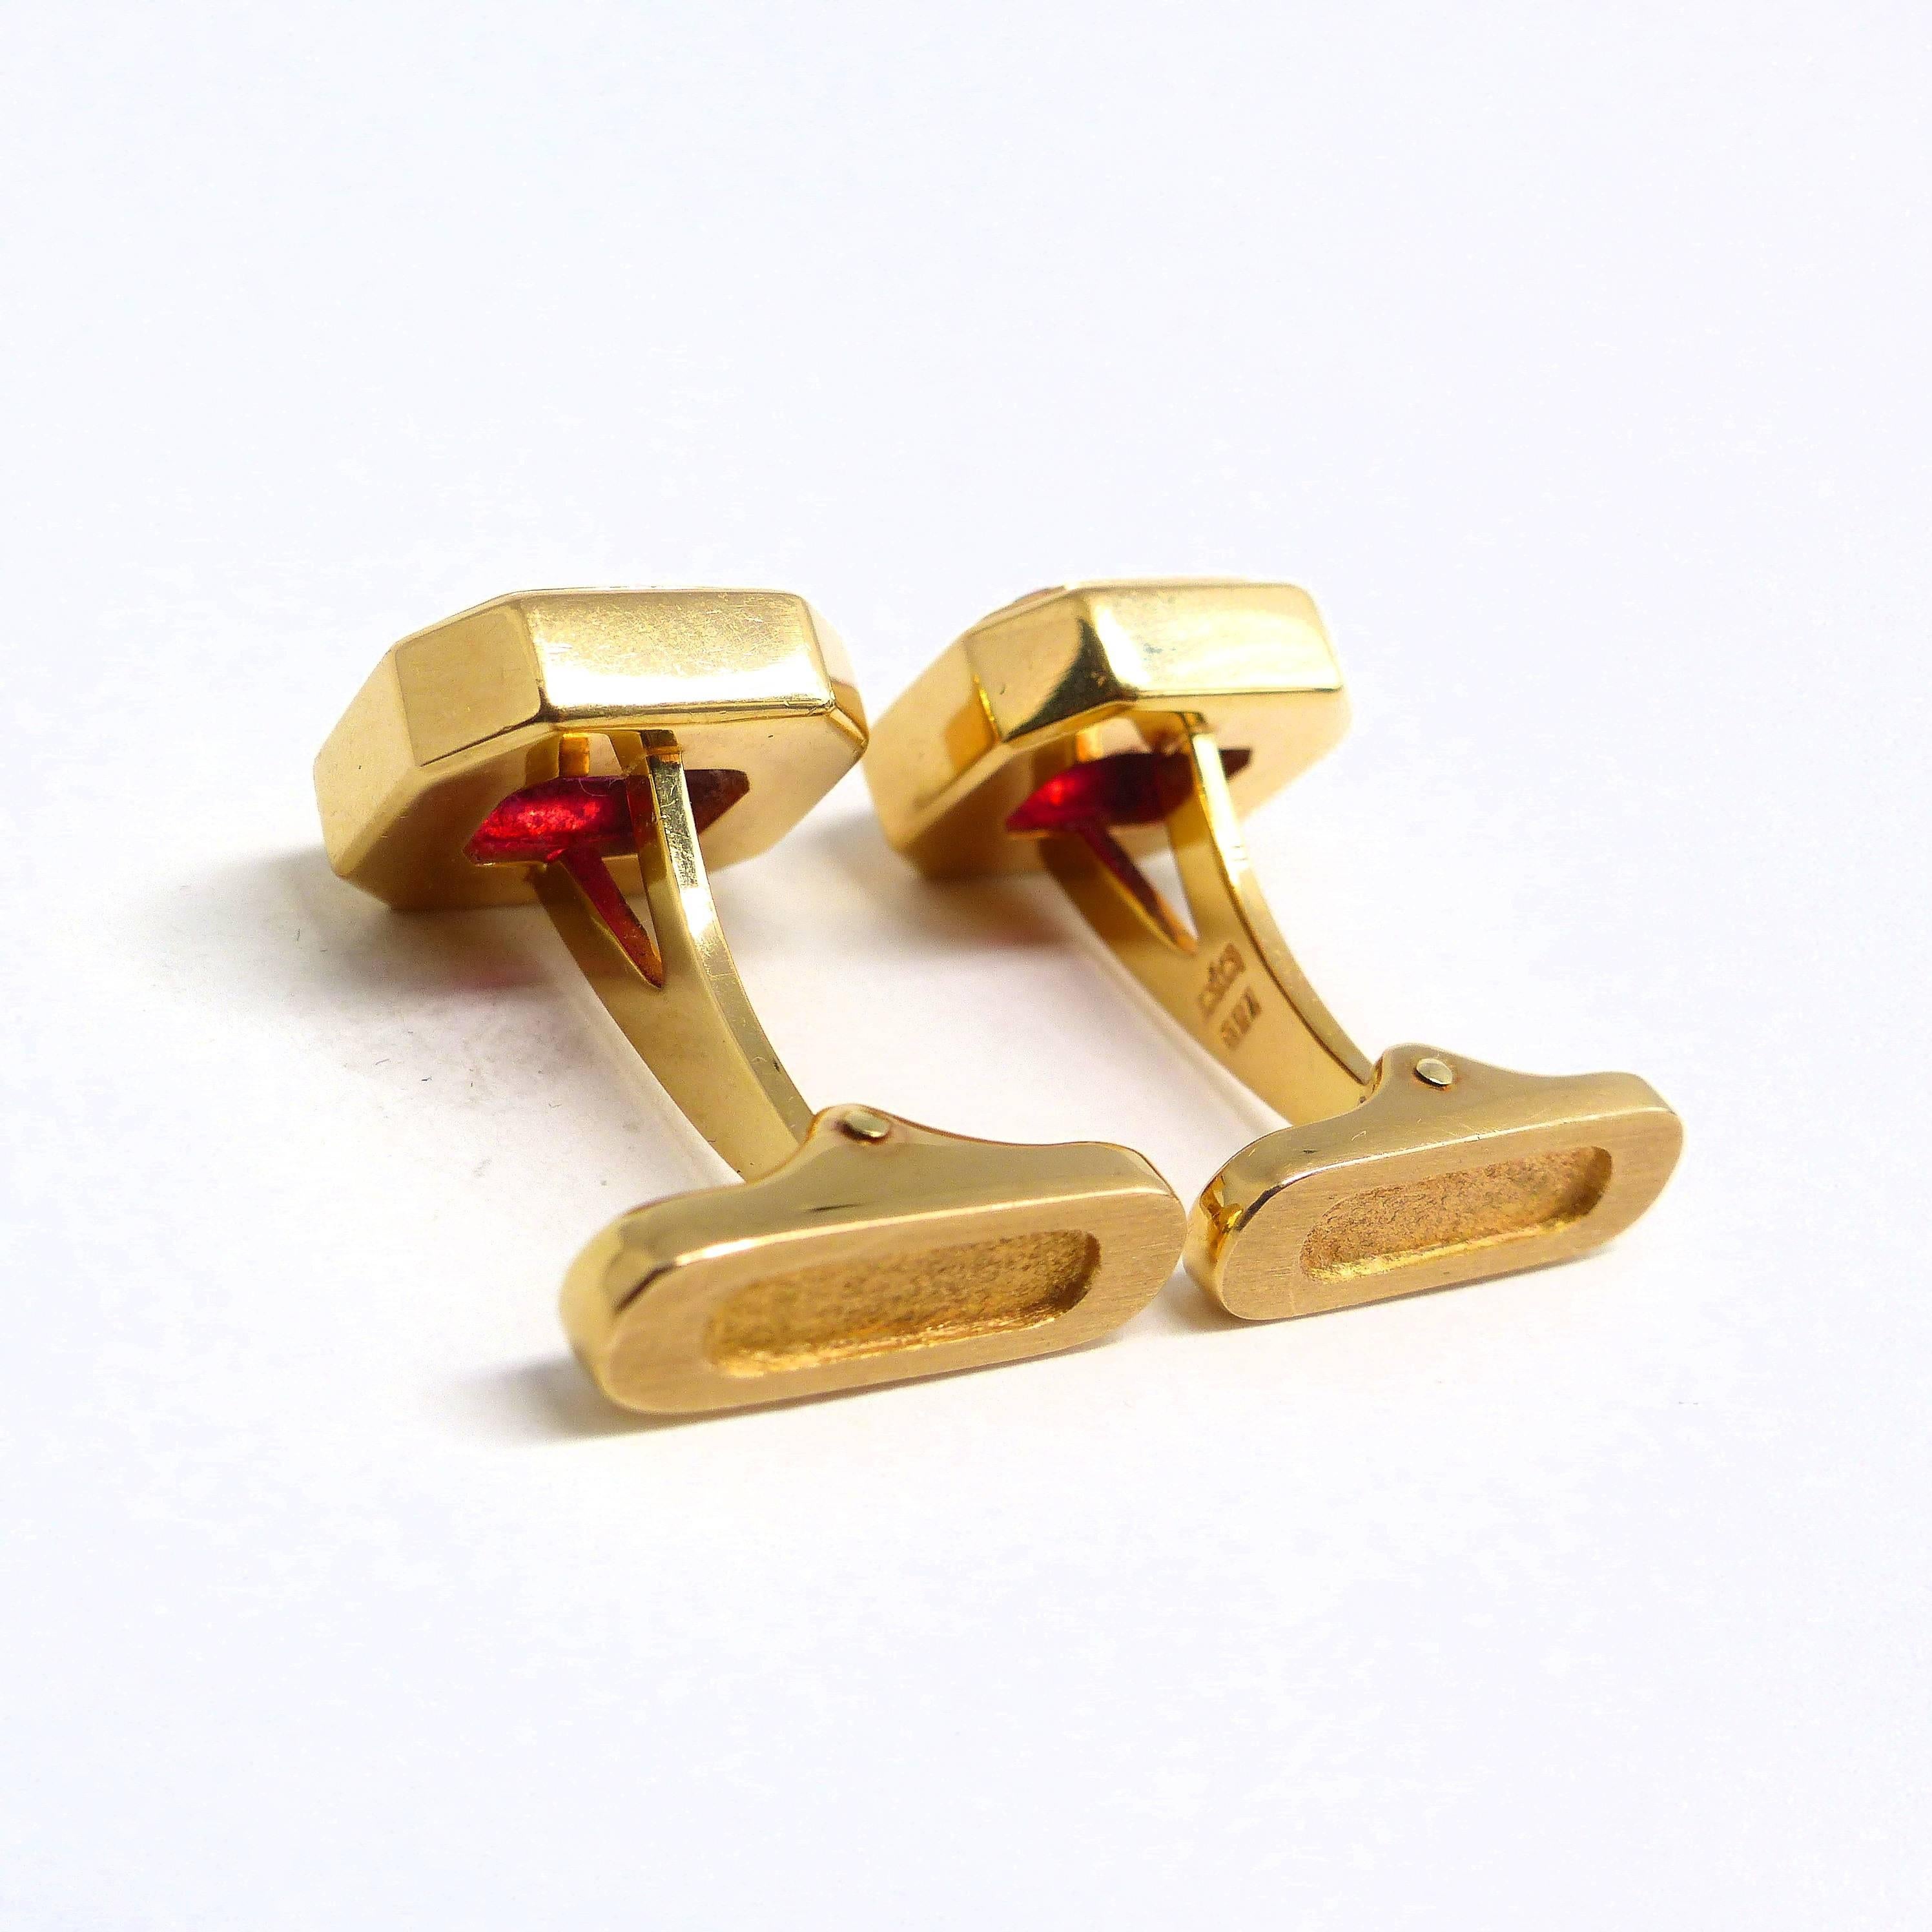 18k rose gold cufflinks